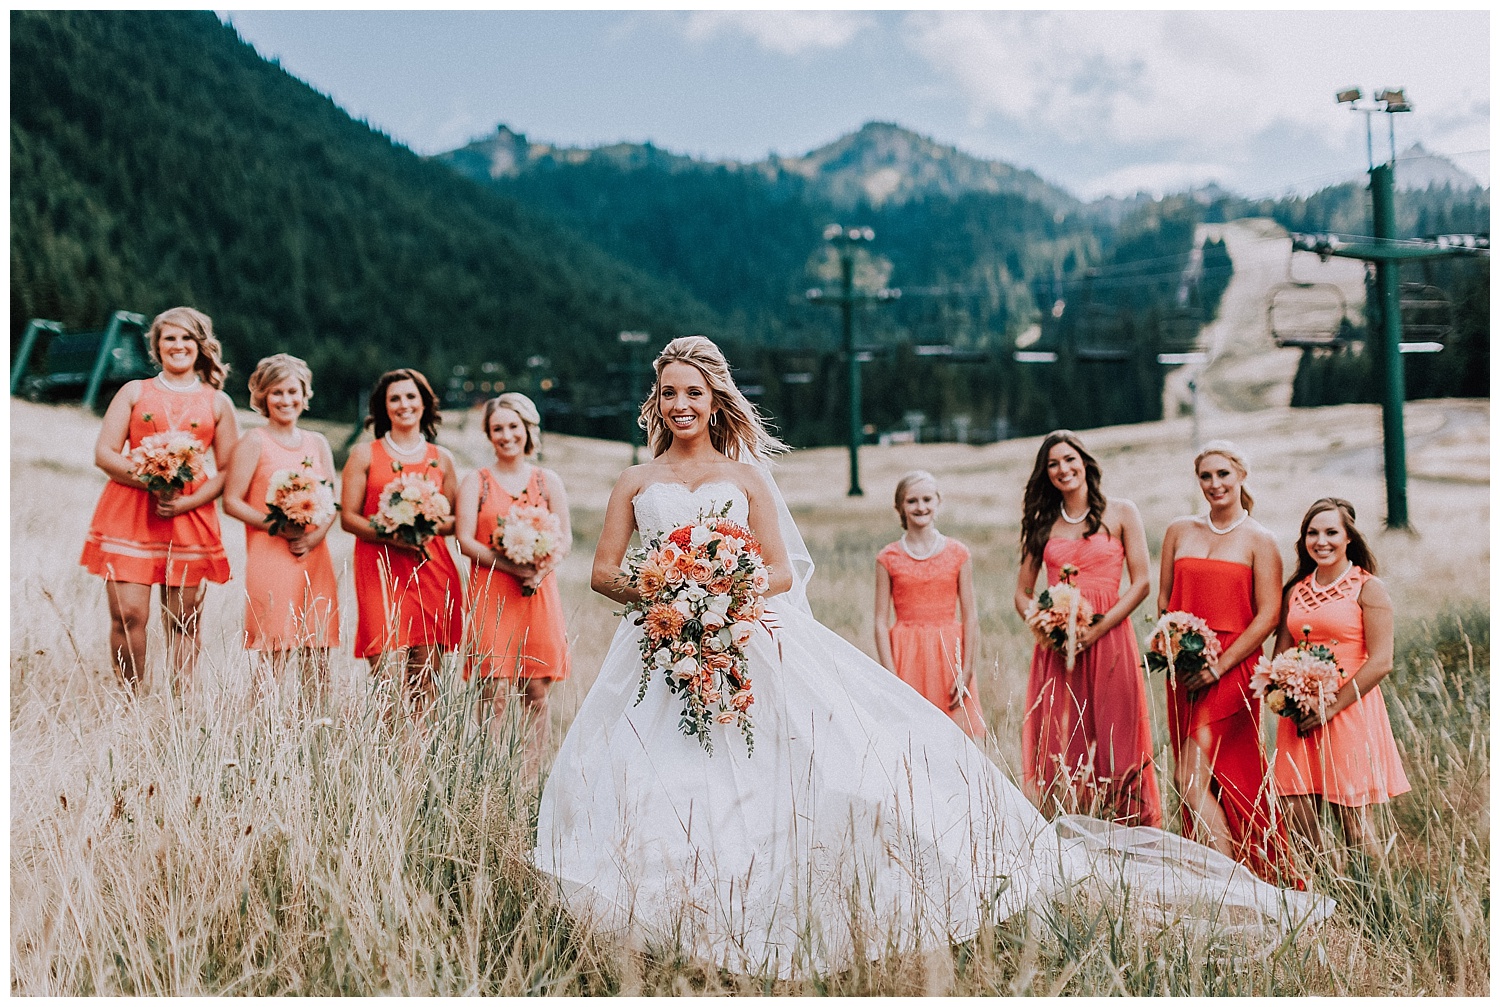 Crystal Mountain wedding venue in Washington by Kyle Goldie of Luma Weddings